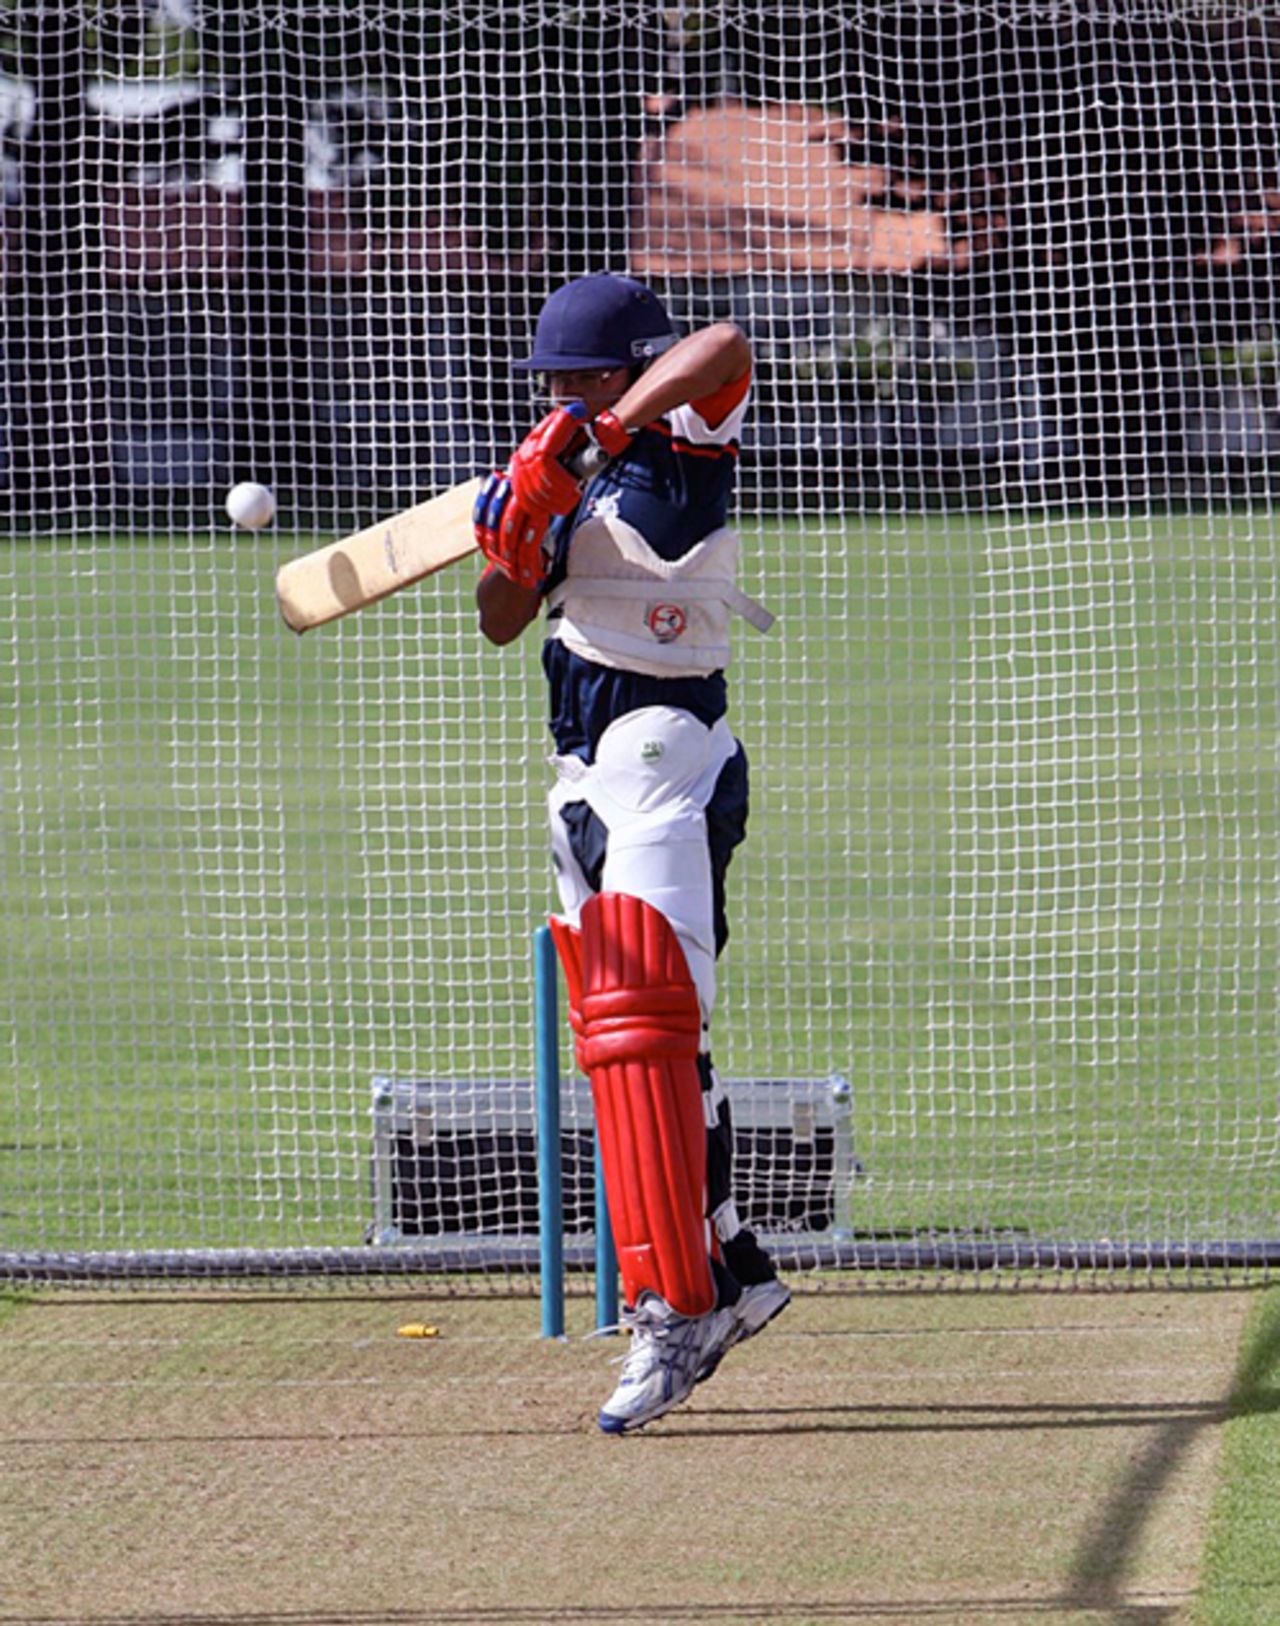 Ashish Gadhia batting in the nets at Nelson Park, Napier